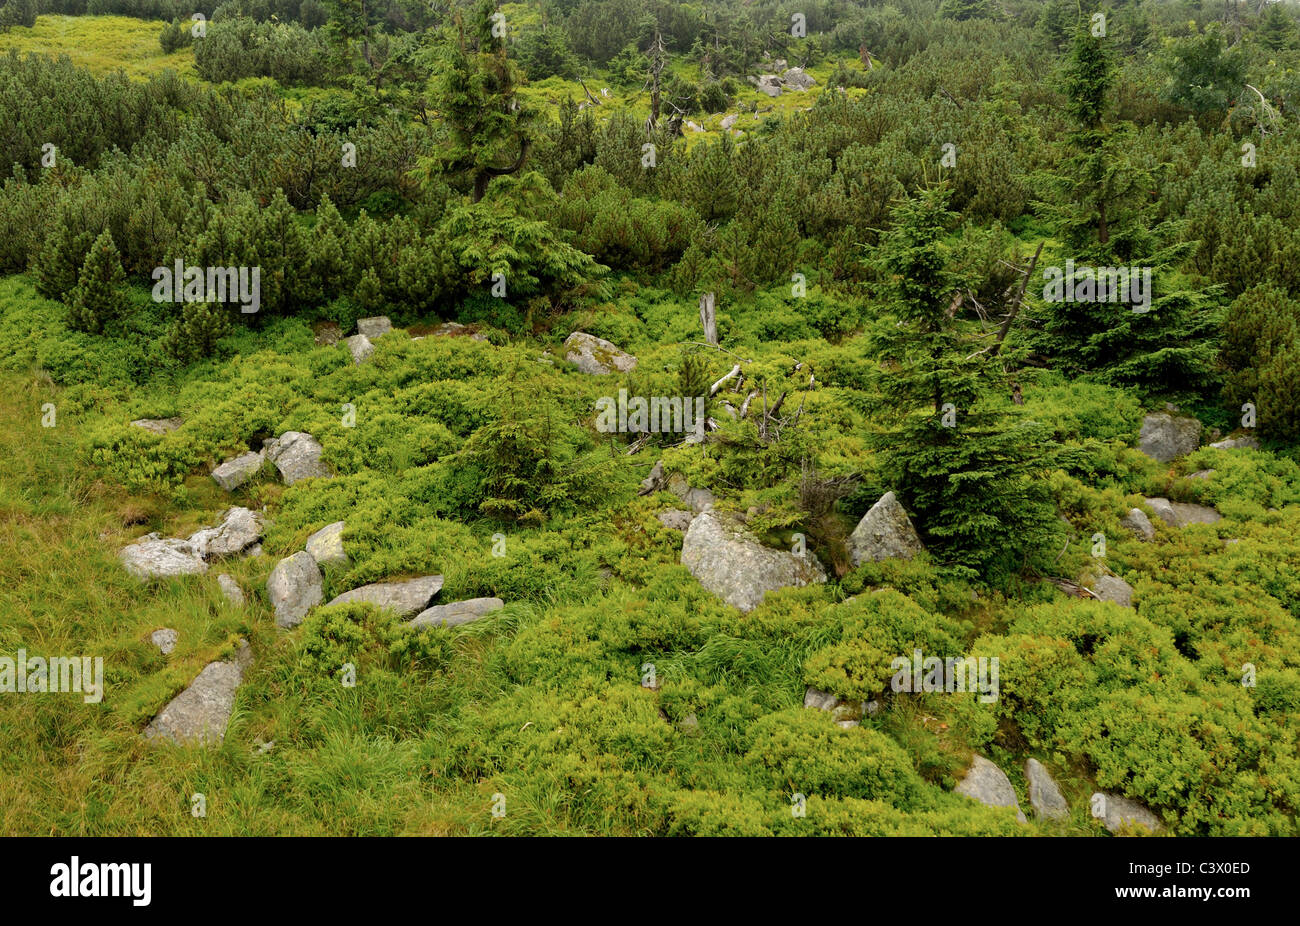 Dwarf trees zone and vegetation in the mountains of Karkonosze Stock Photo